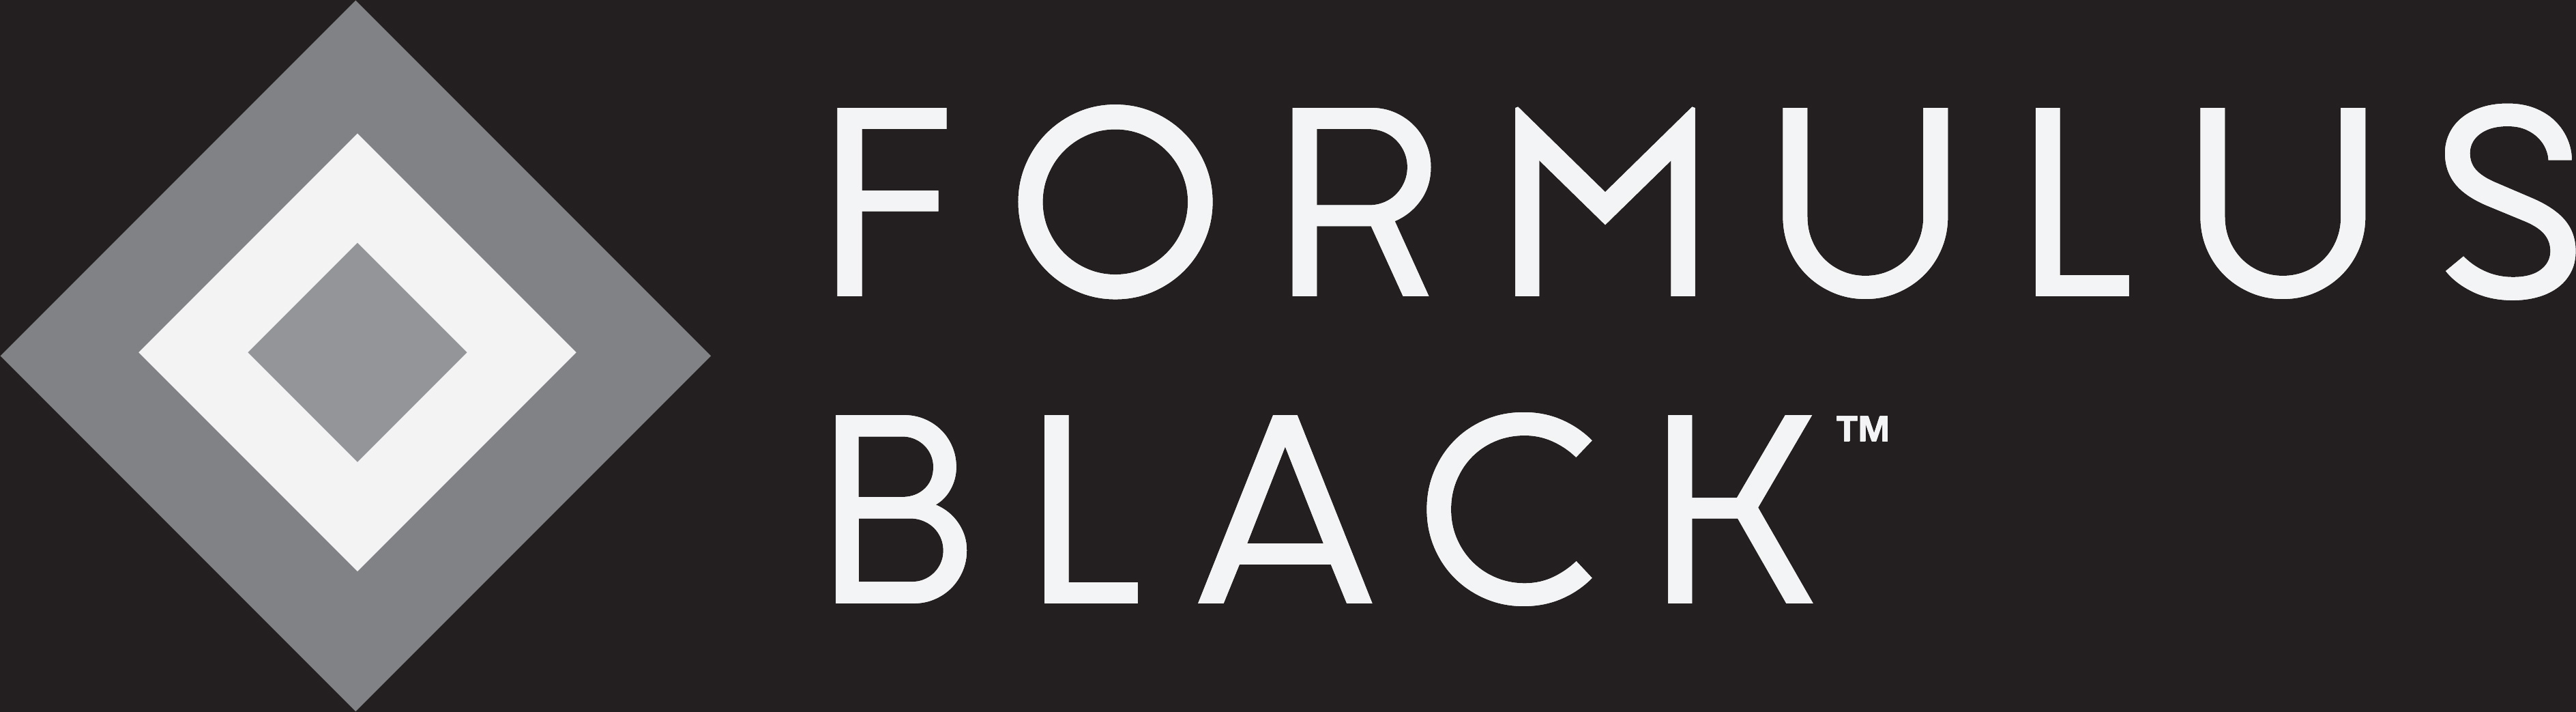 Formulus Black, www.formulusblack.com